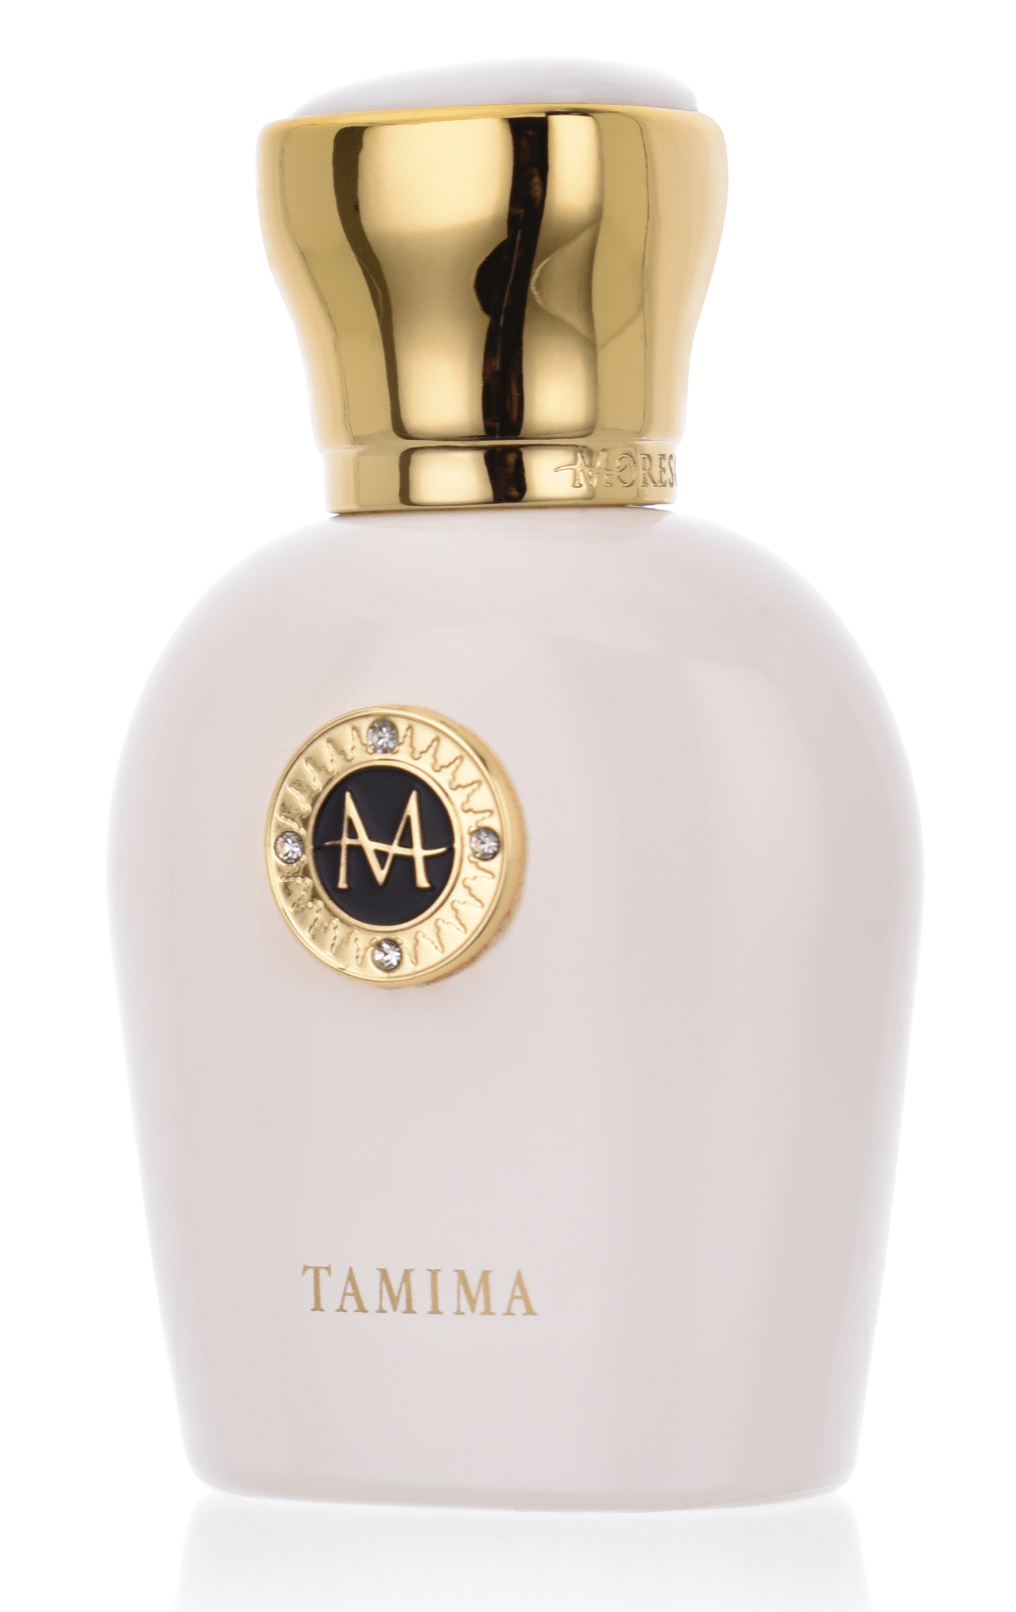 Moresque Black & White Collection Tamima 5 ml Eau de Parfum Abfüllung   